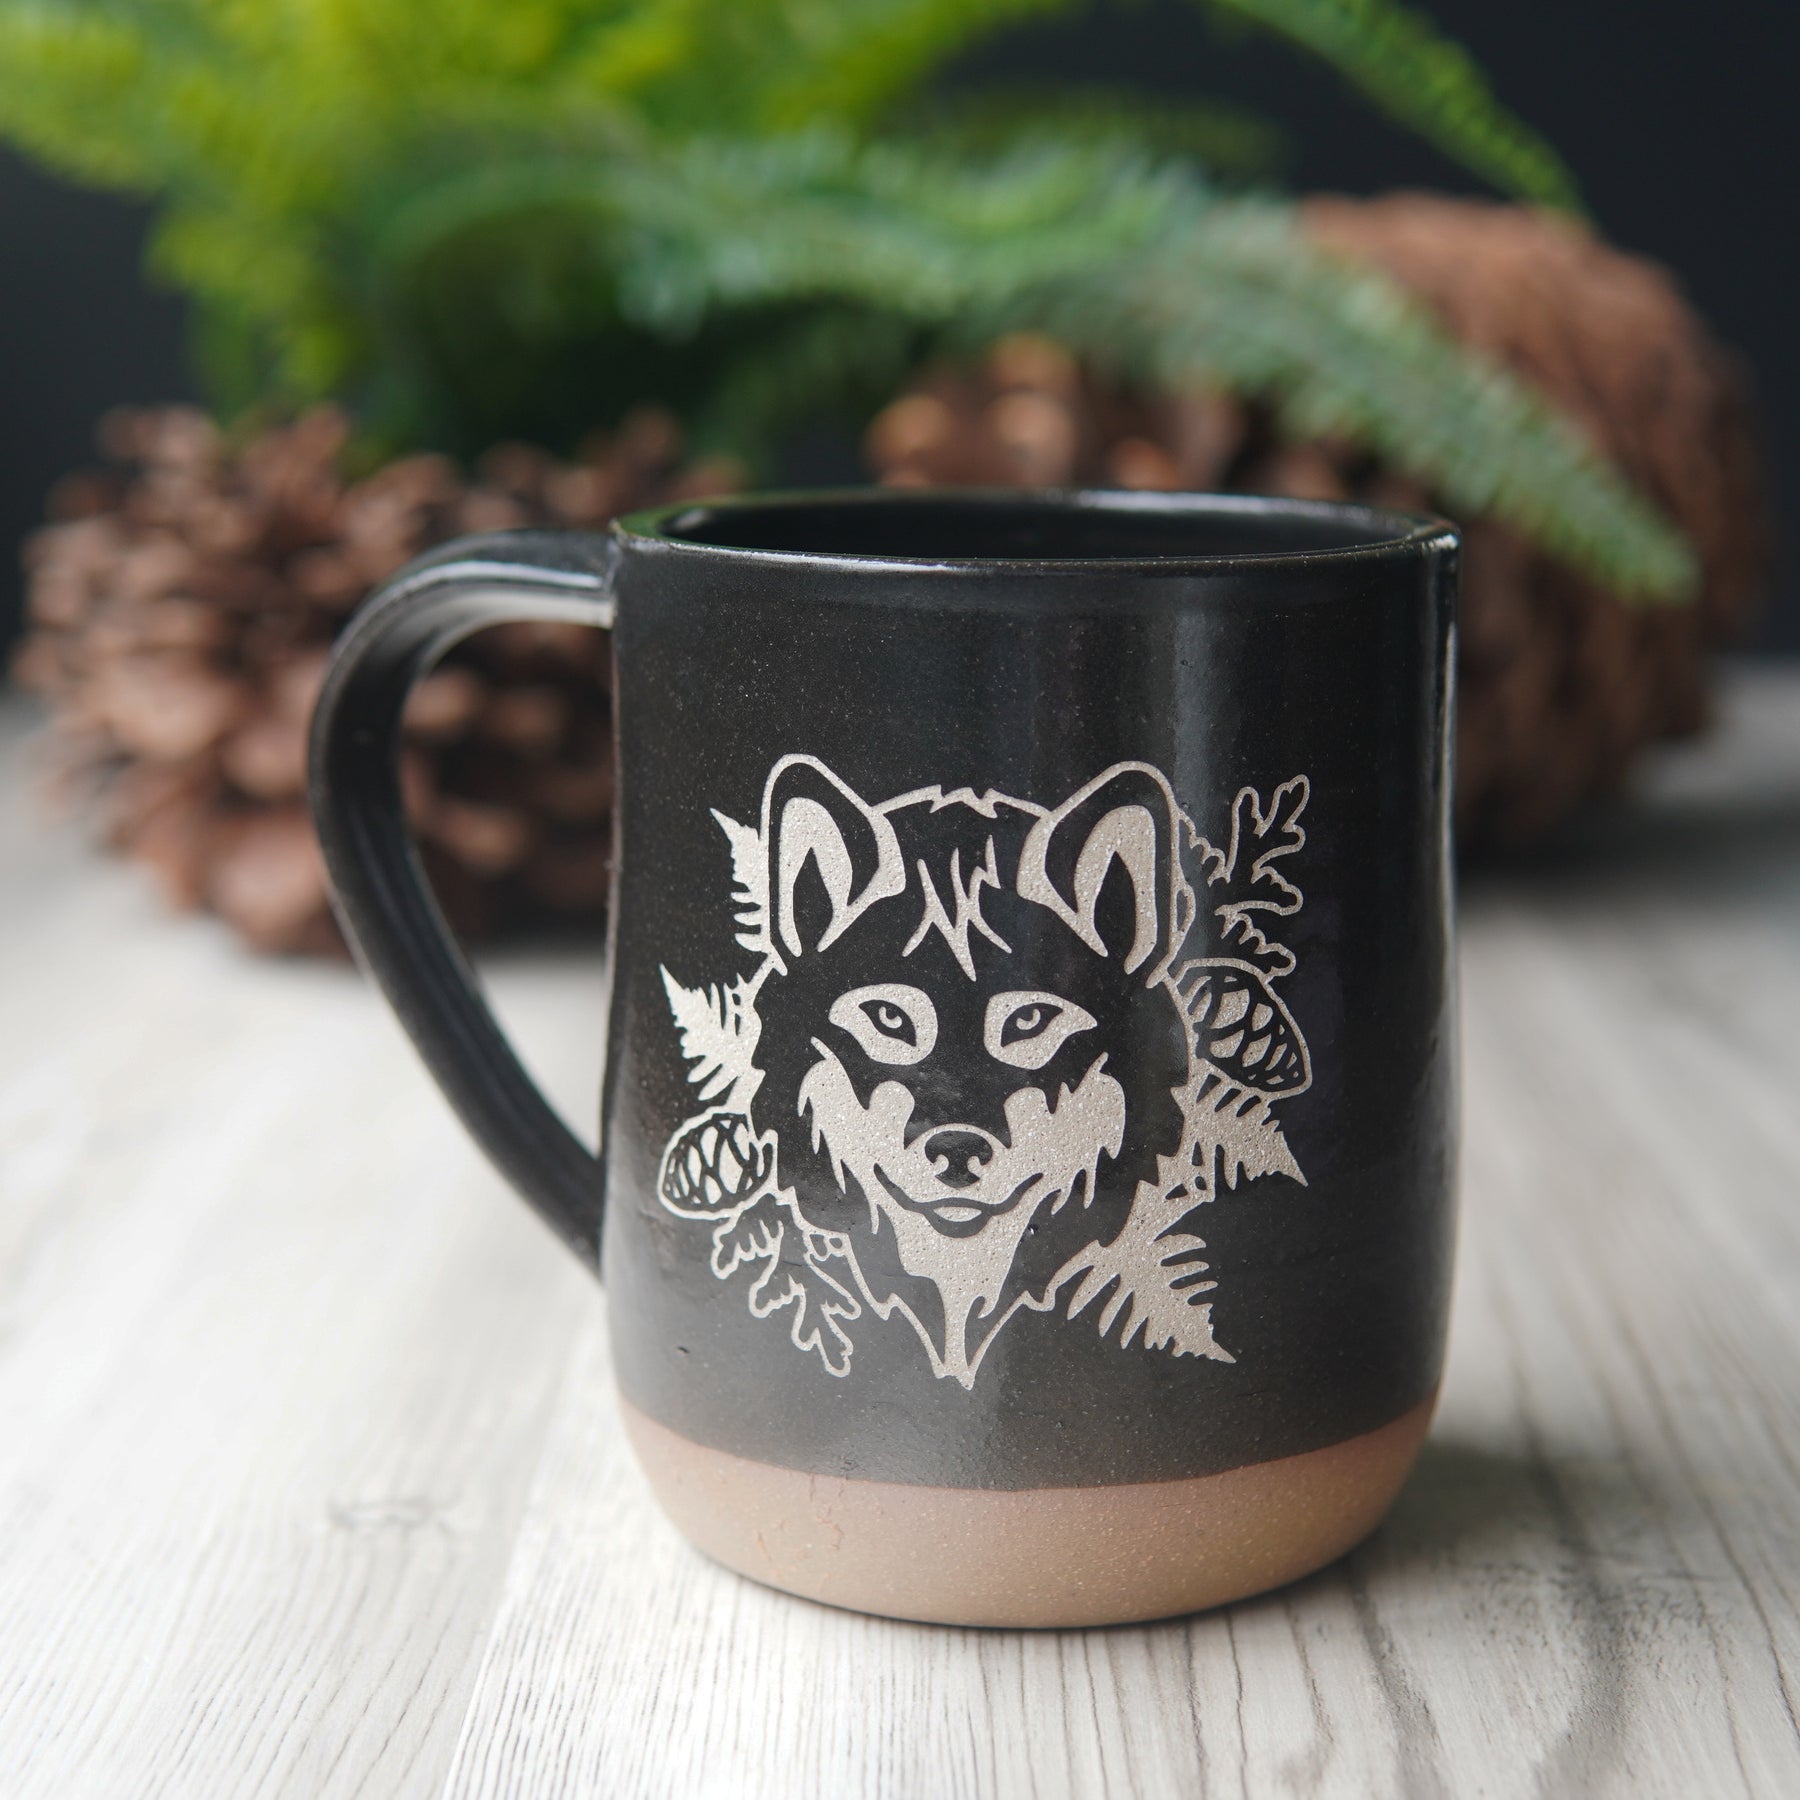 16 oz. Wolf Coffee Mug - High-Quality Porcelain Mug - Wolf Coffee Co.